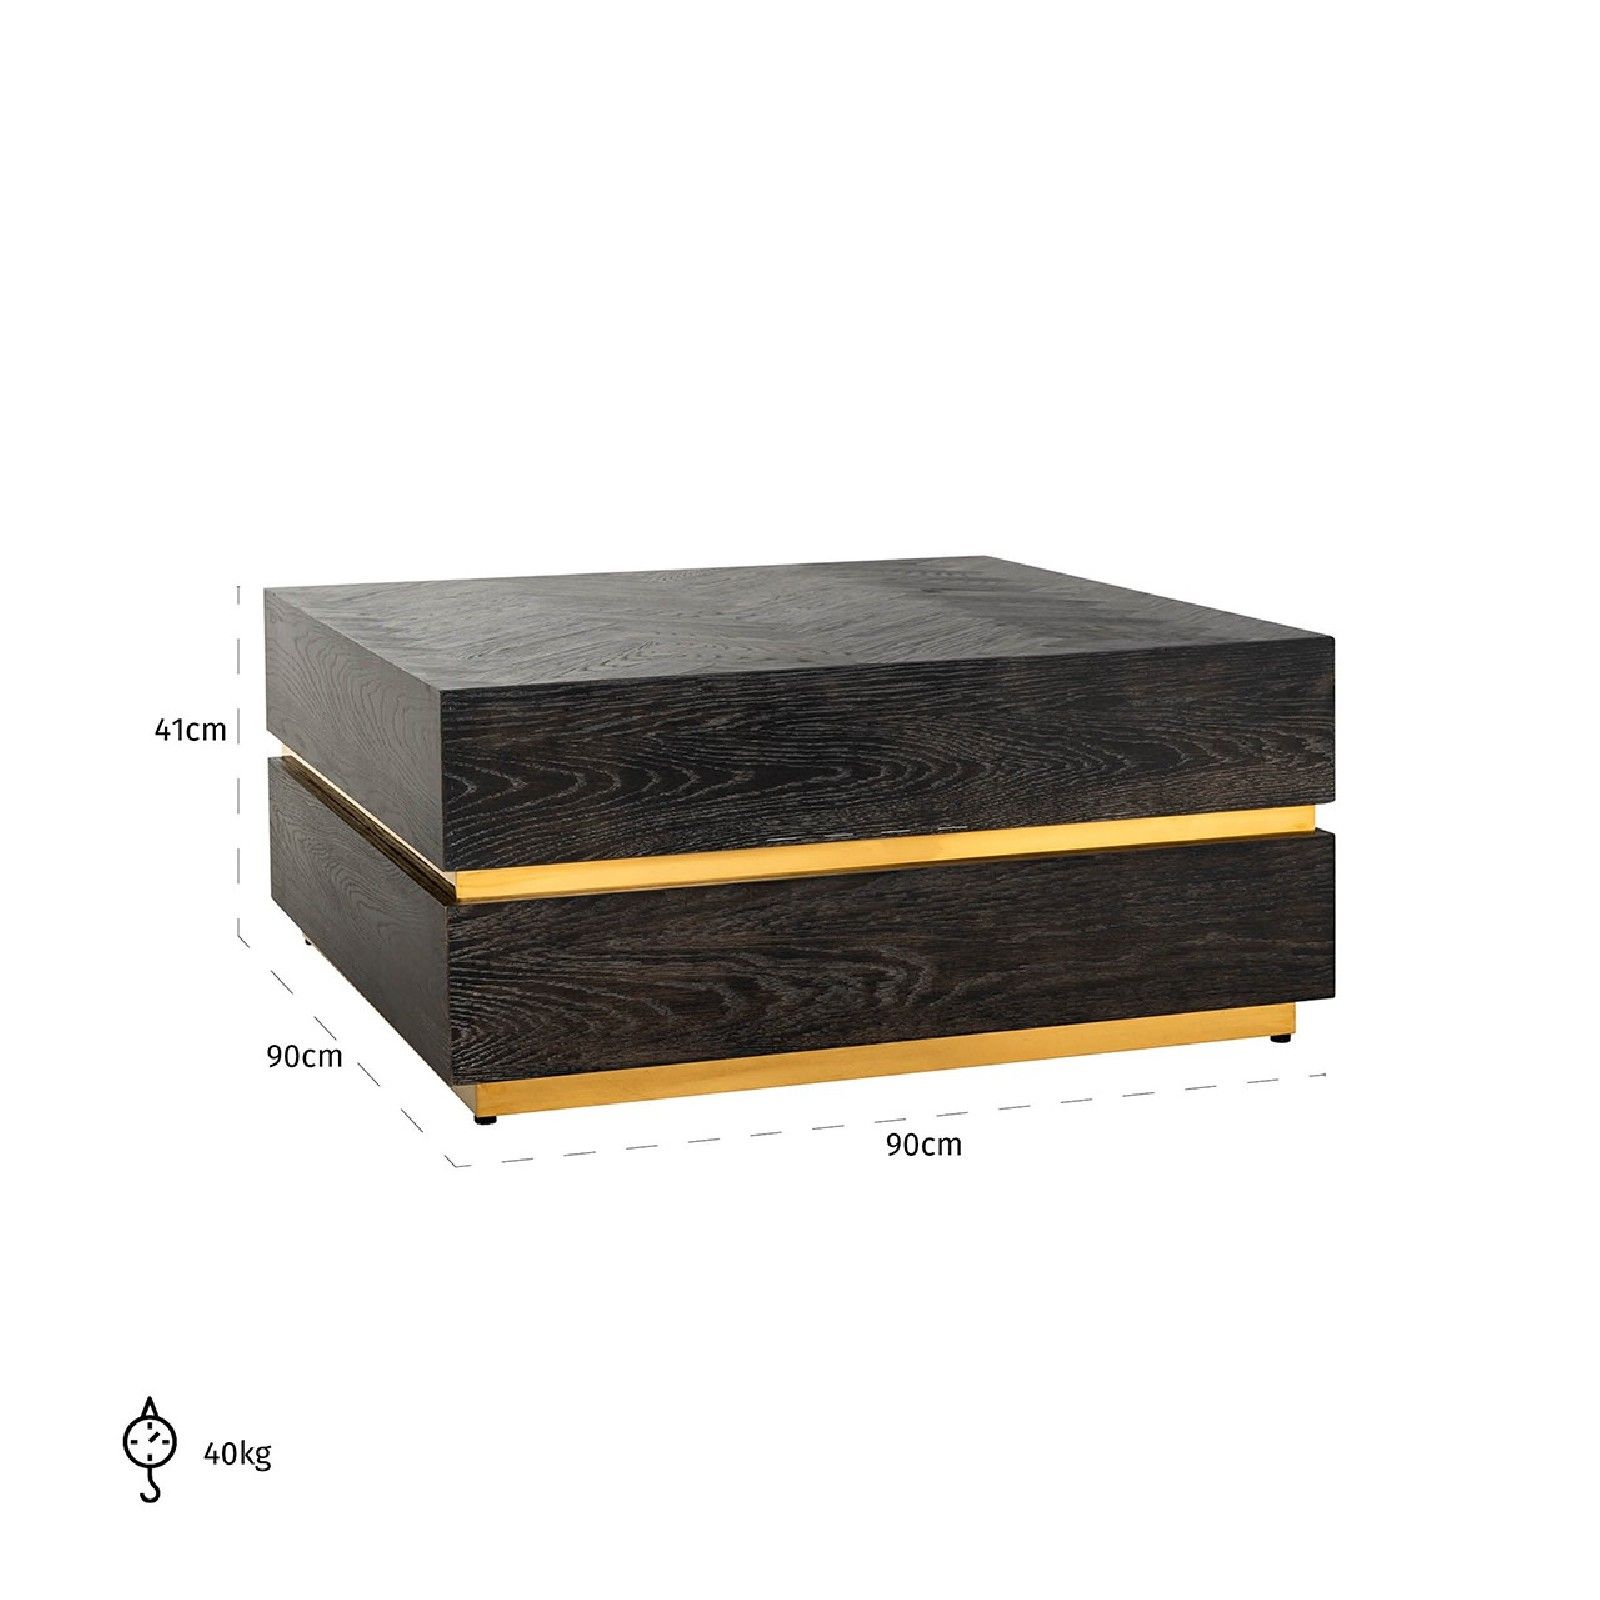 Table de salon Blackbone gold 90x90 (Block) Tables basses rectangulaires - 536